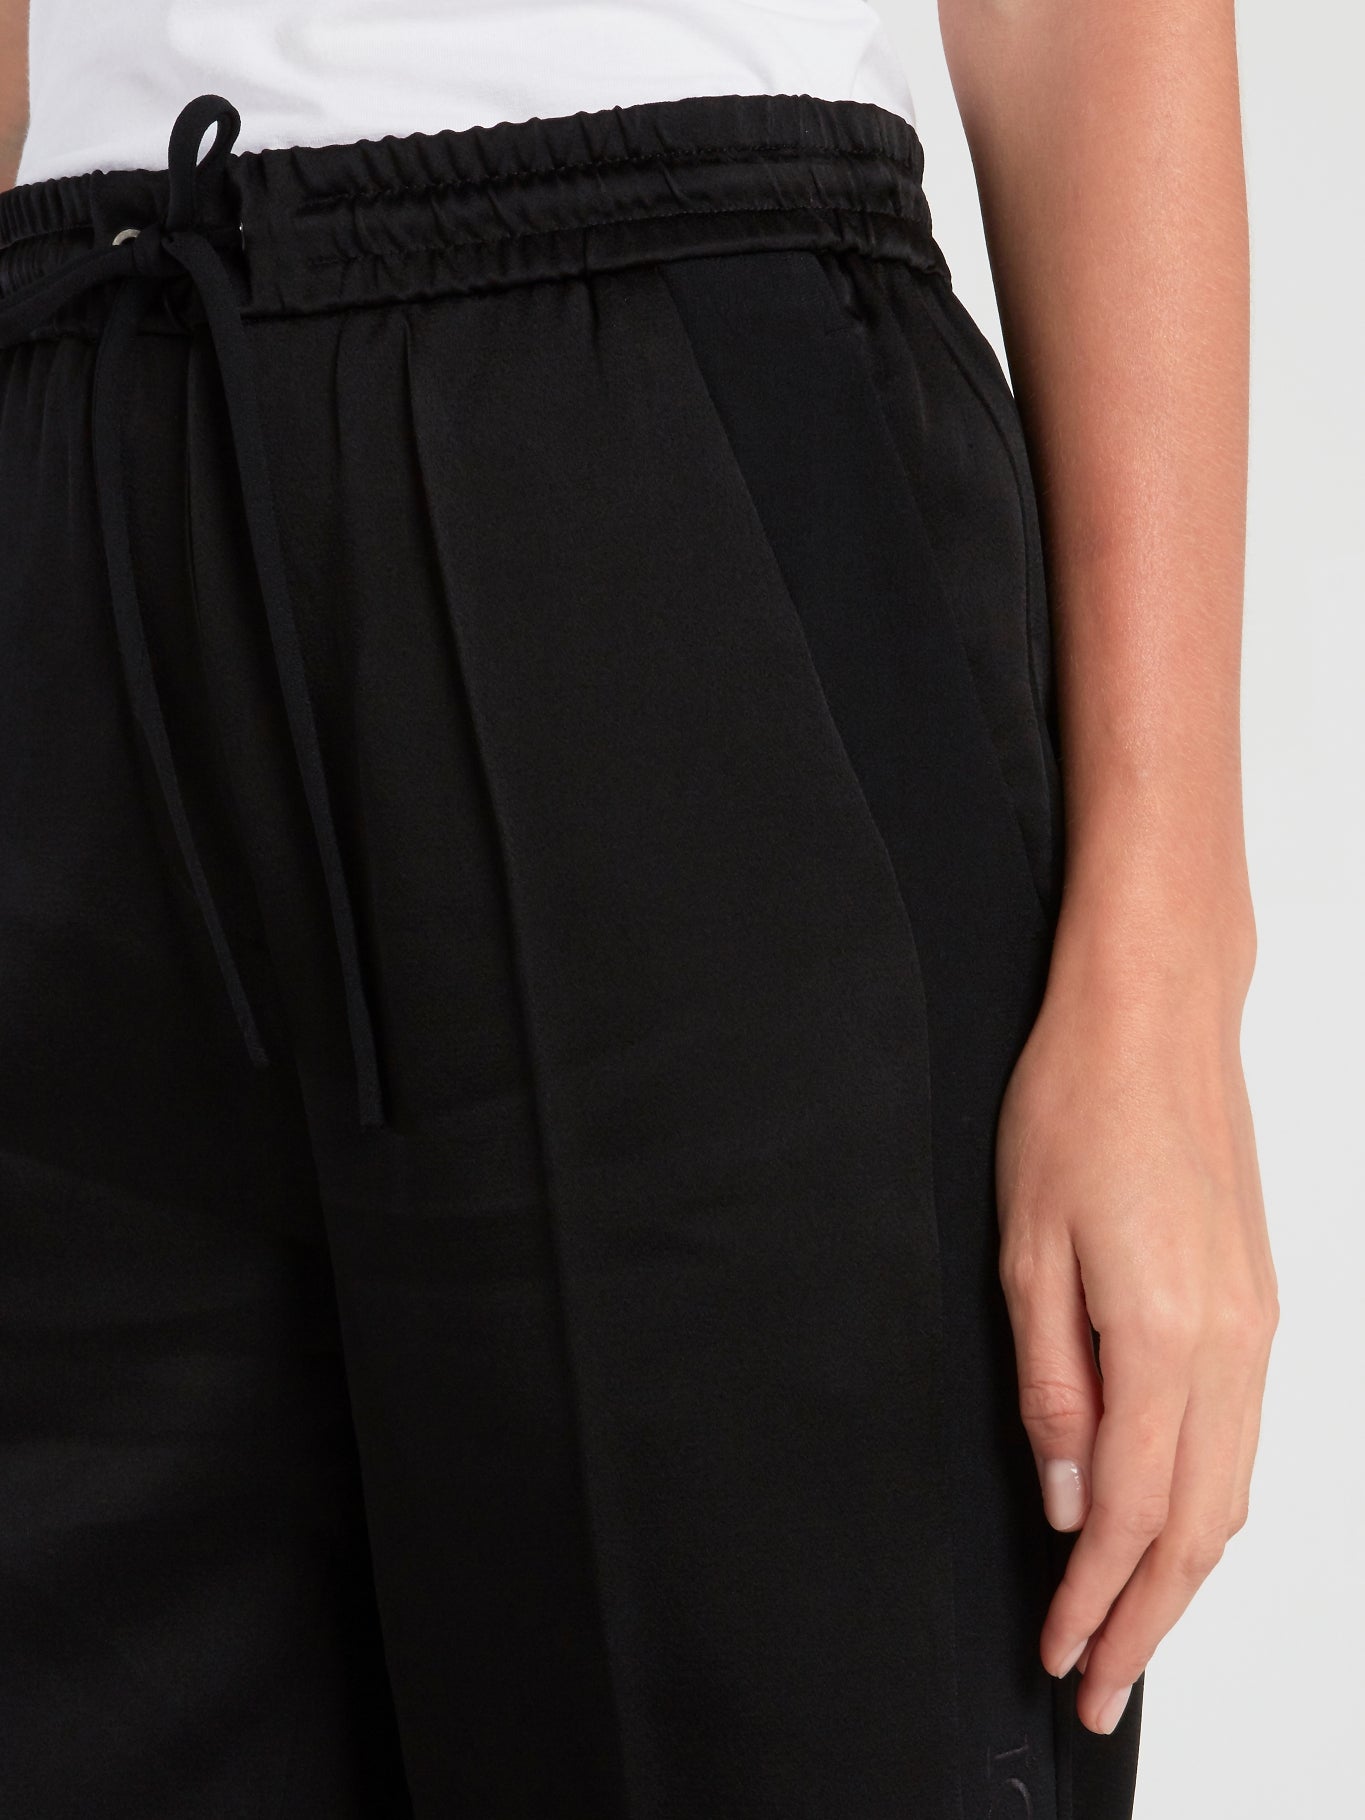 Black Pleated Drawstring Shorts